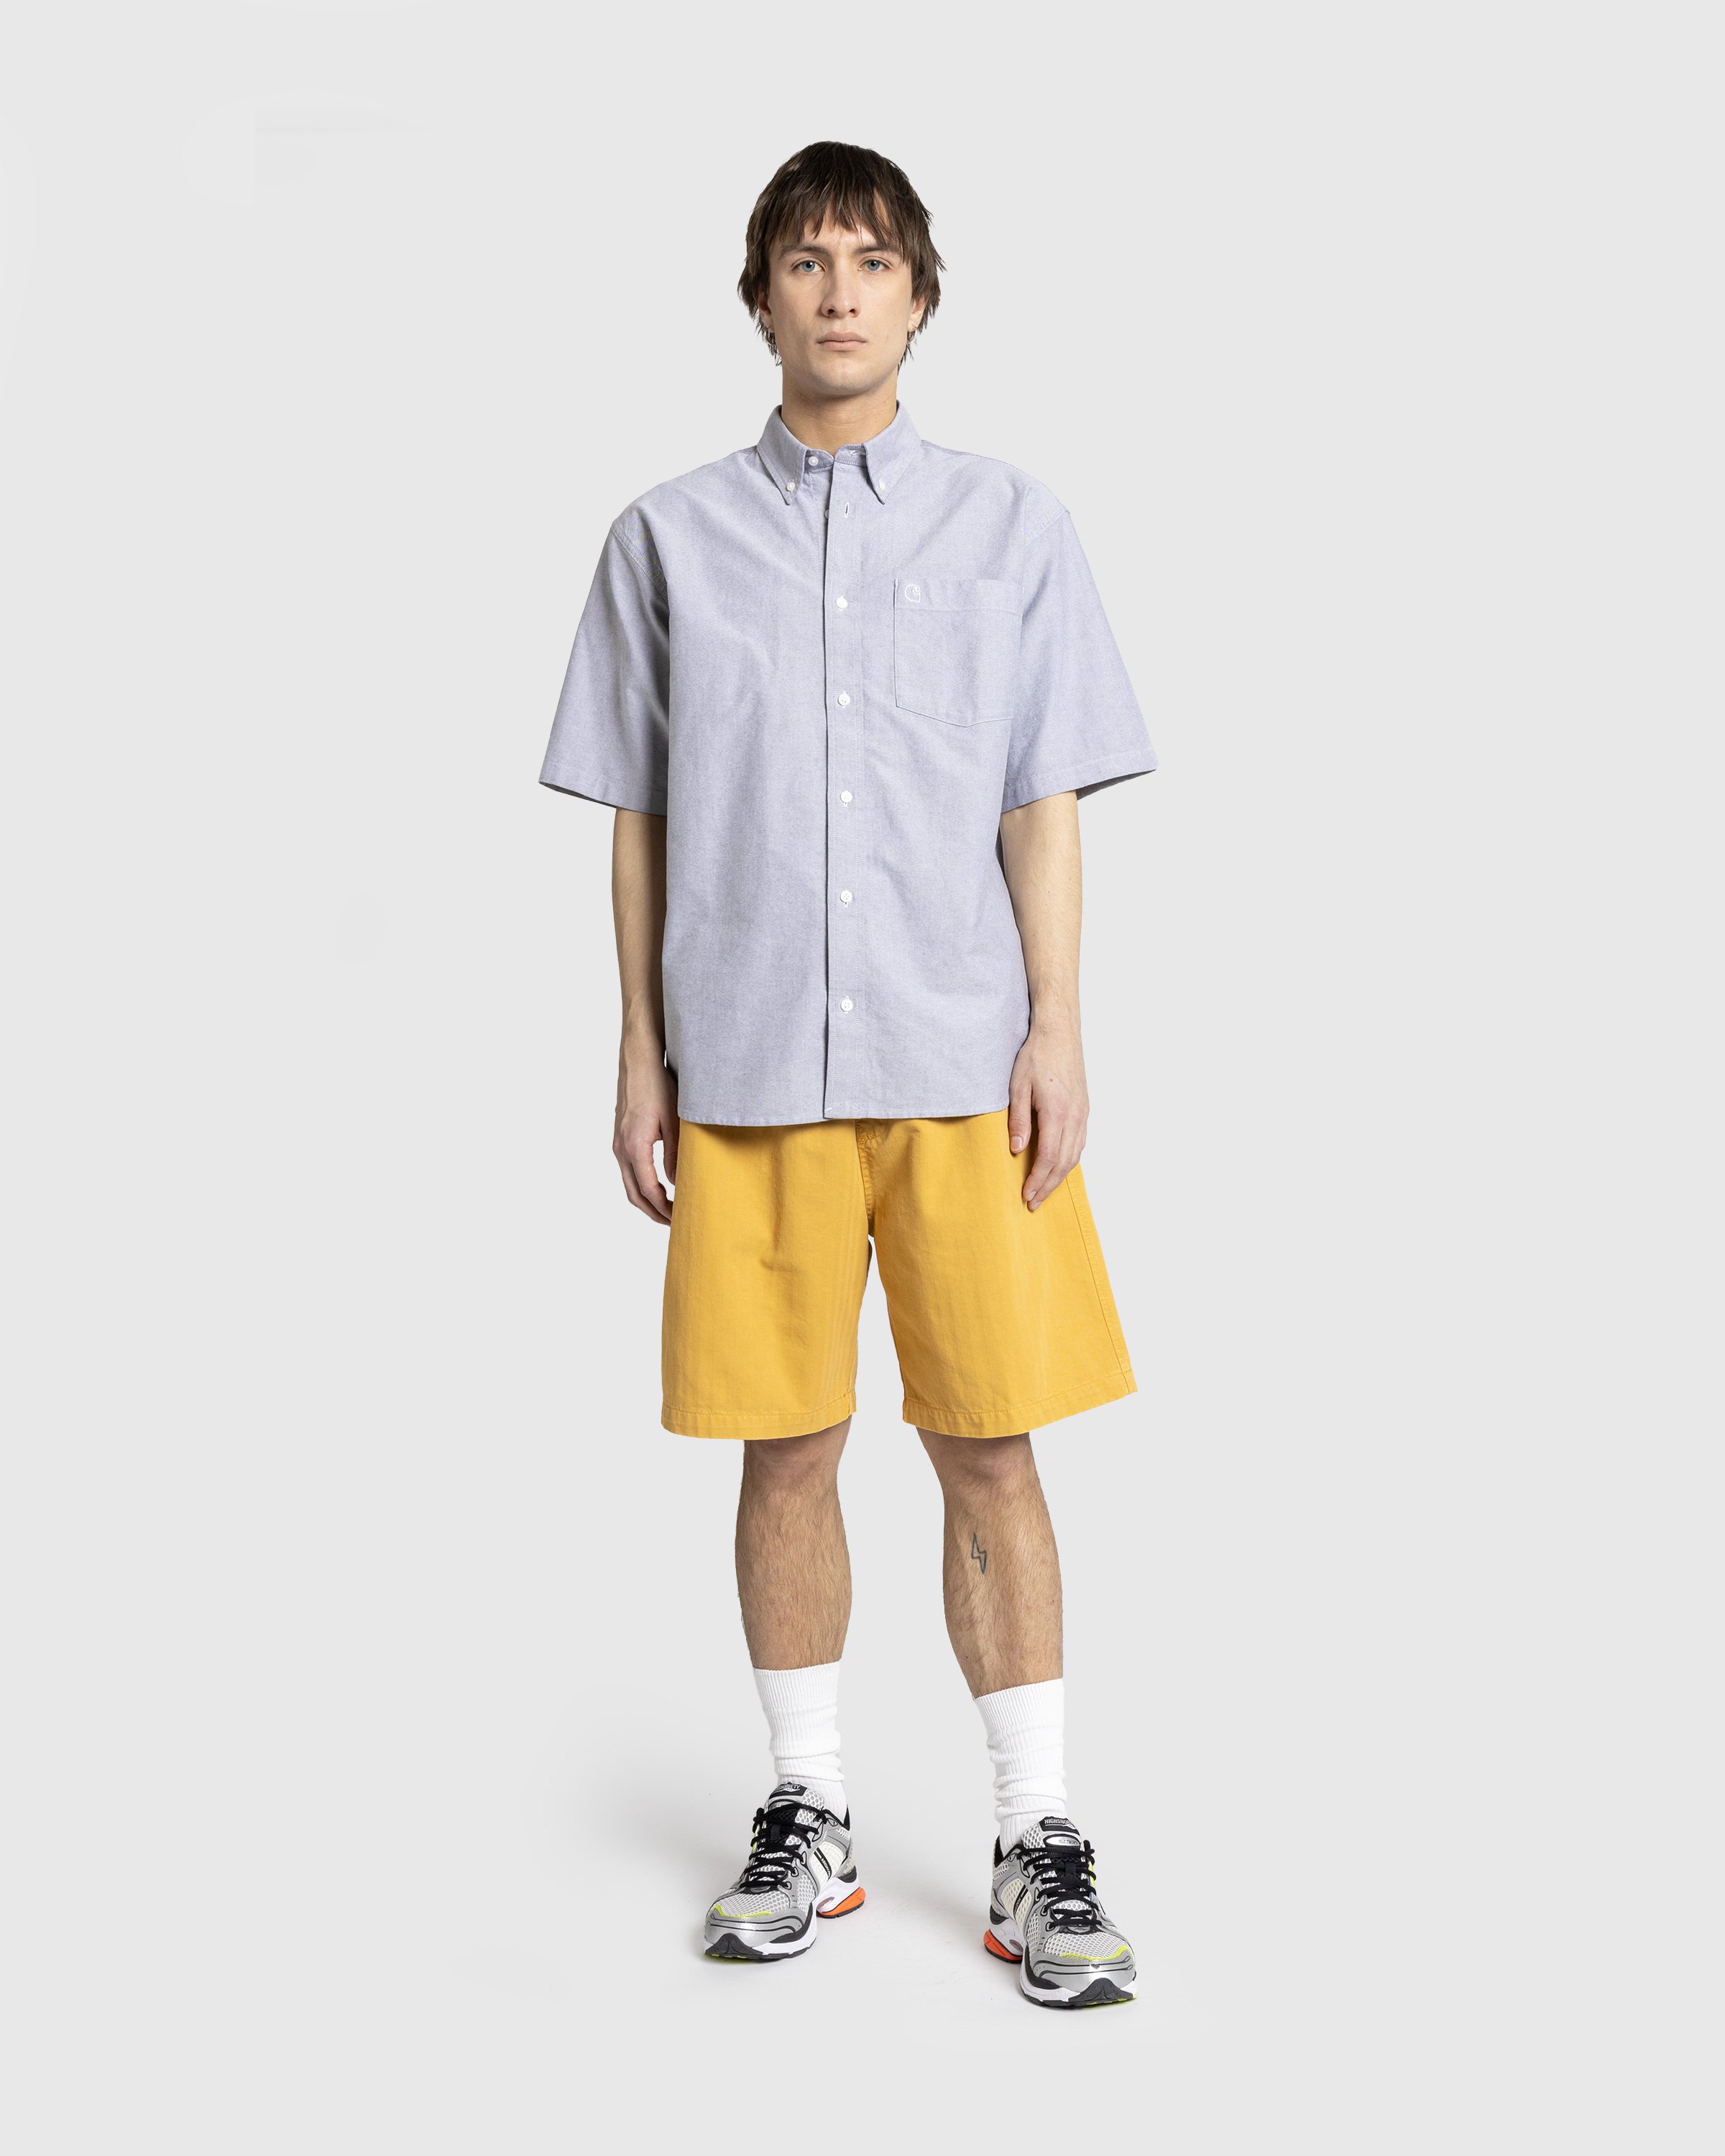 Carhartt WIP - S/S Braxton Shirt Charcoal / Wax - Clothing - Grey - Image 3